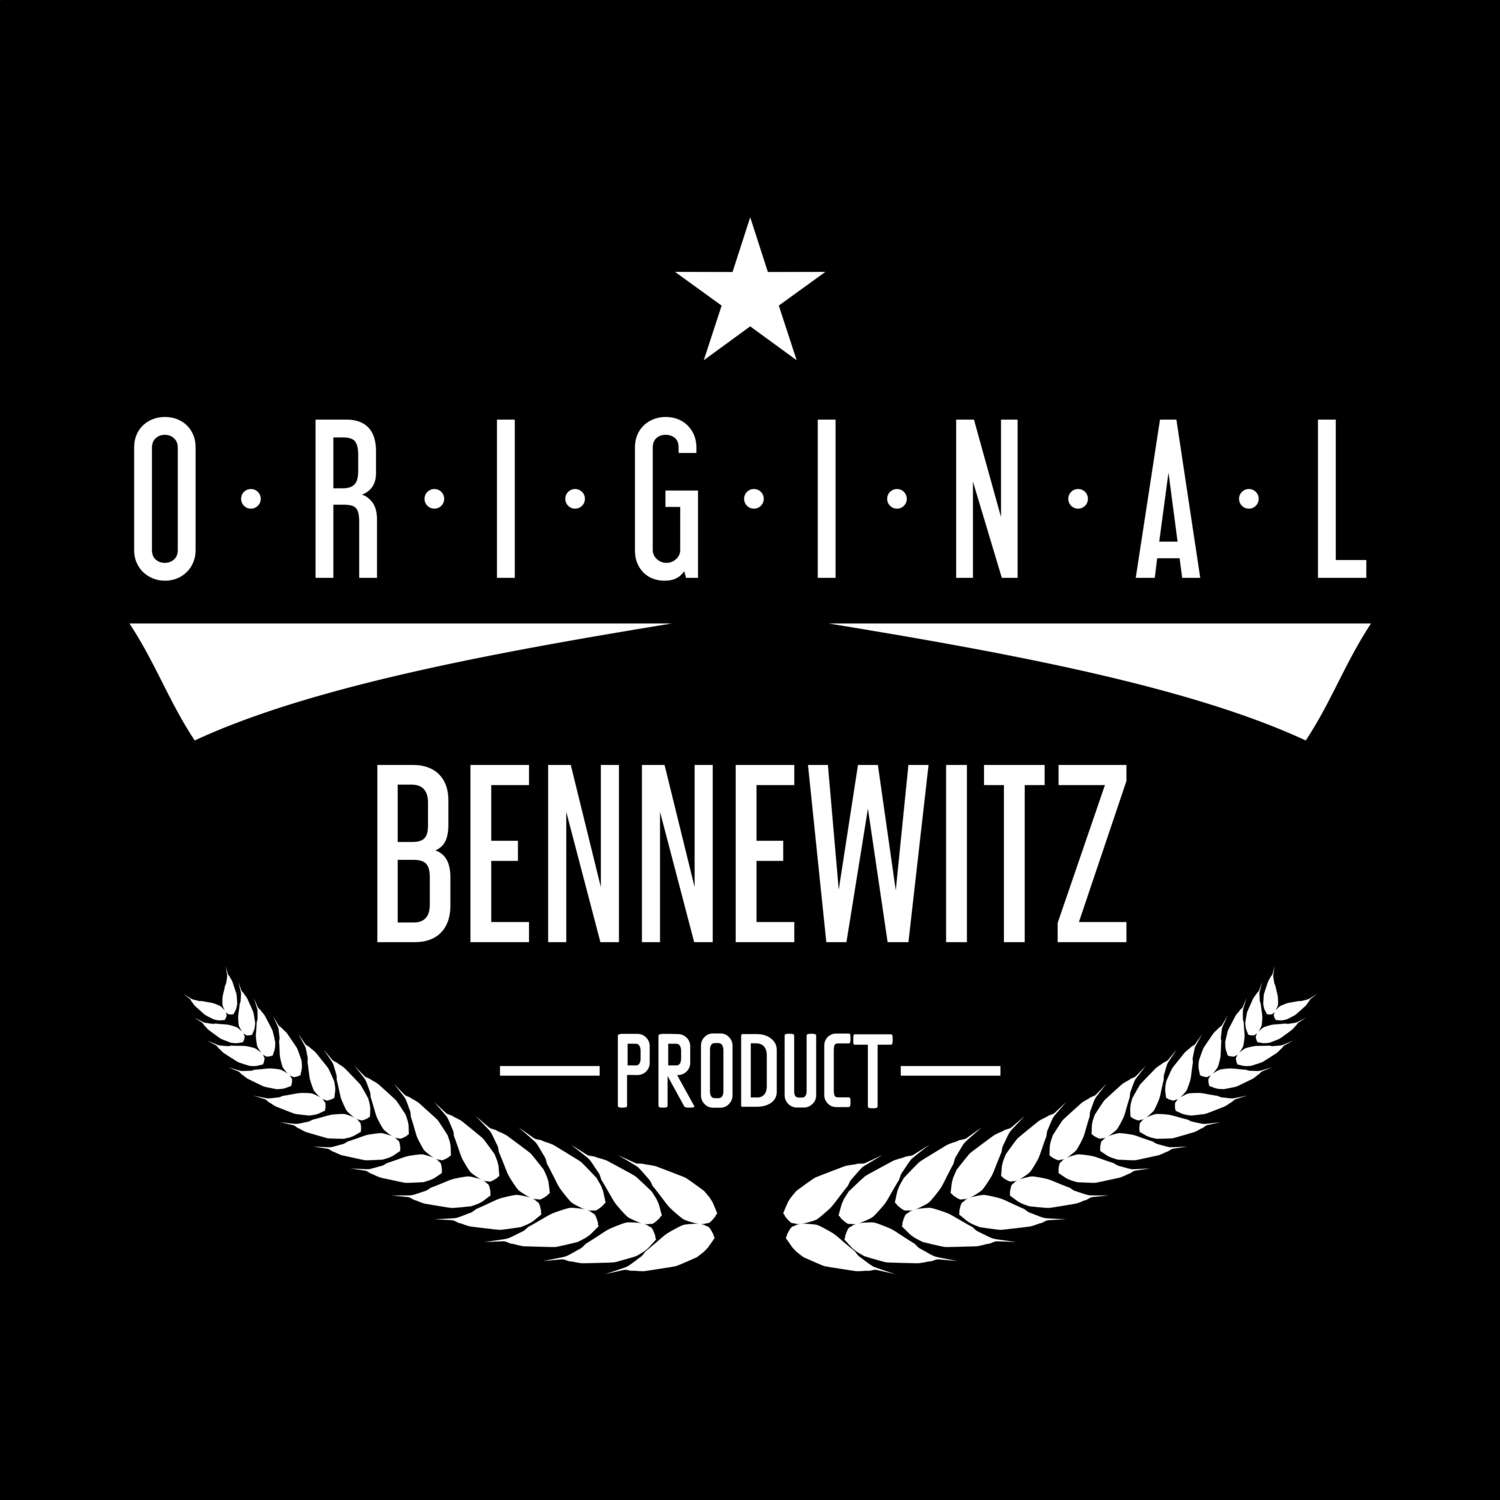 Bennewitz T-Shirt »Original Product«